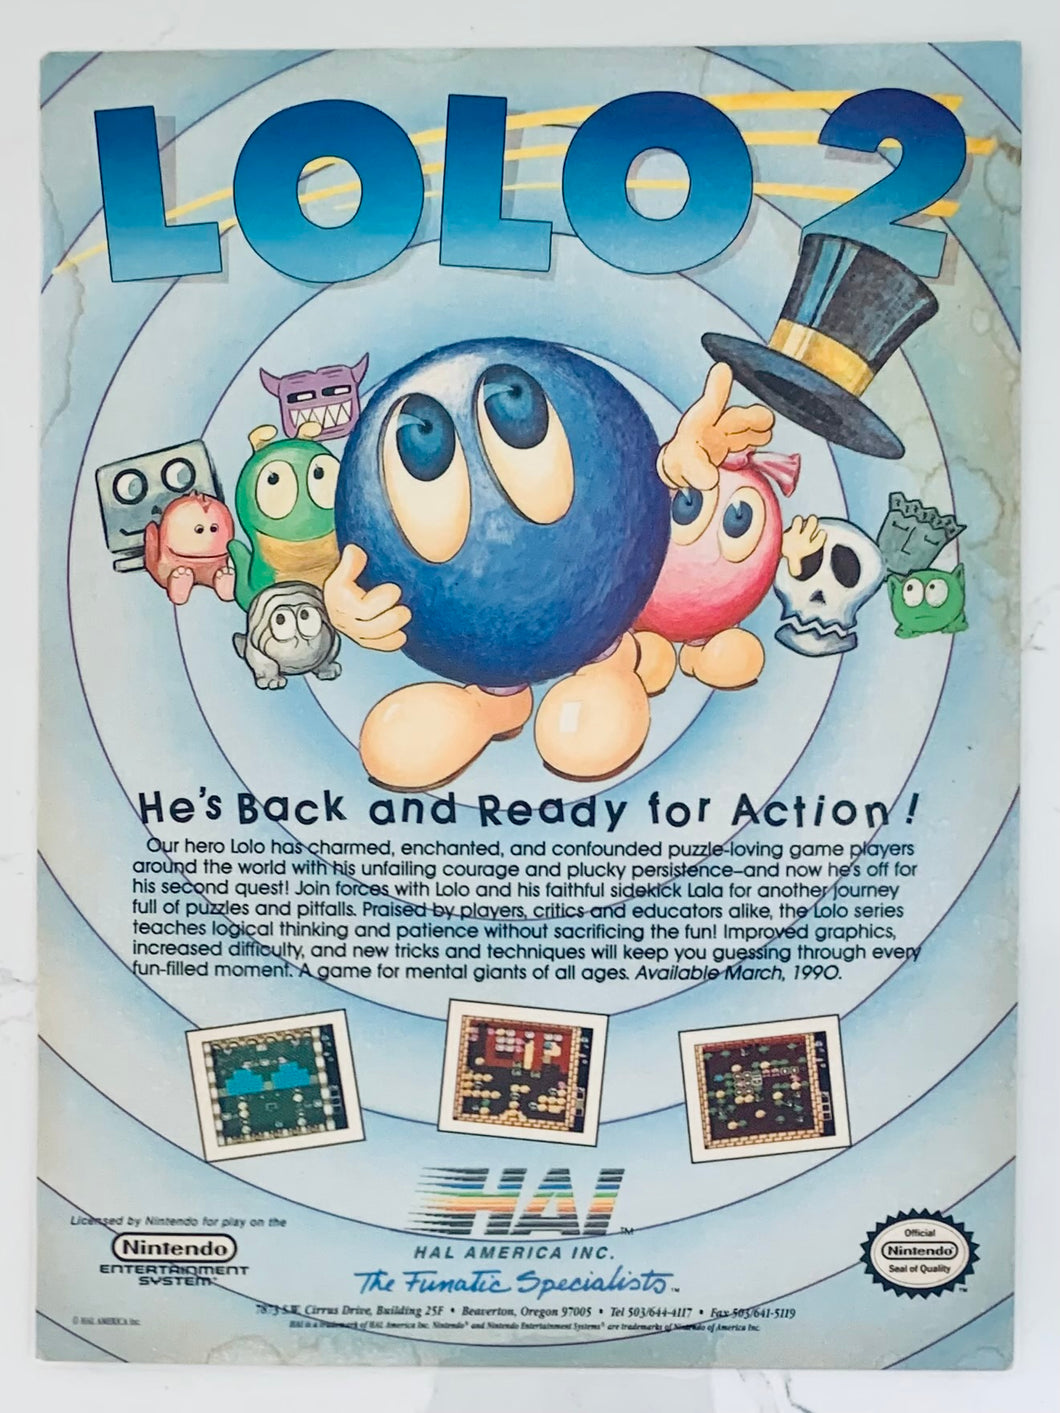 Lolo 2 - Nintendo NES - Original Vintage Advertisement - Print Ads - Laminated A4 Poster